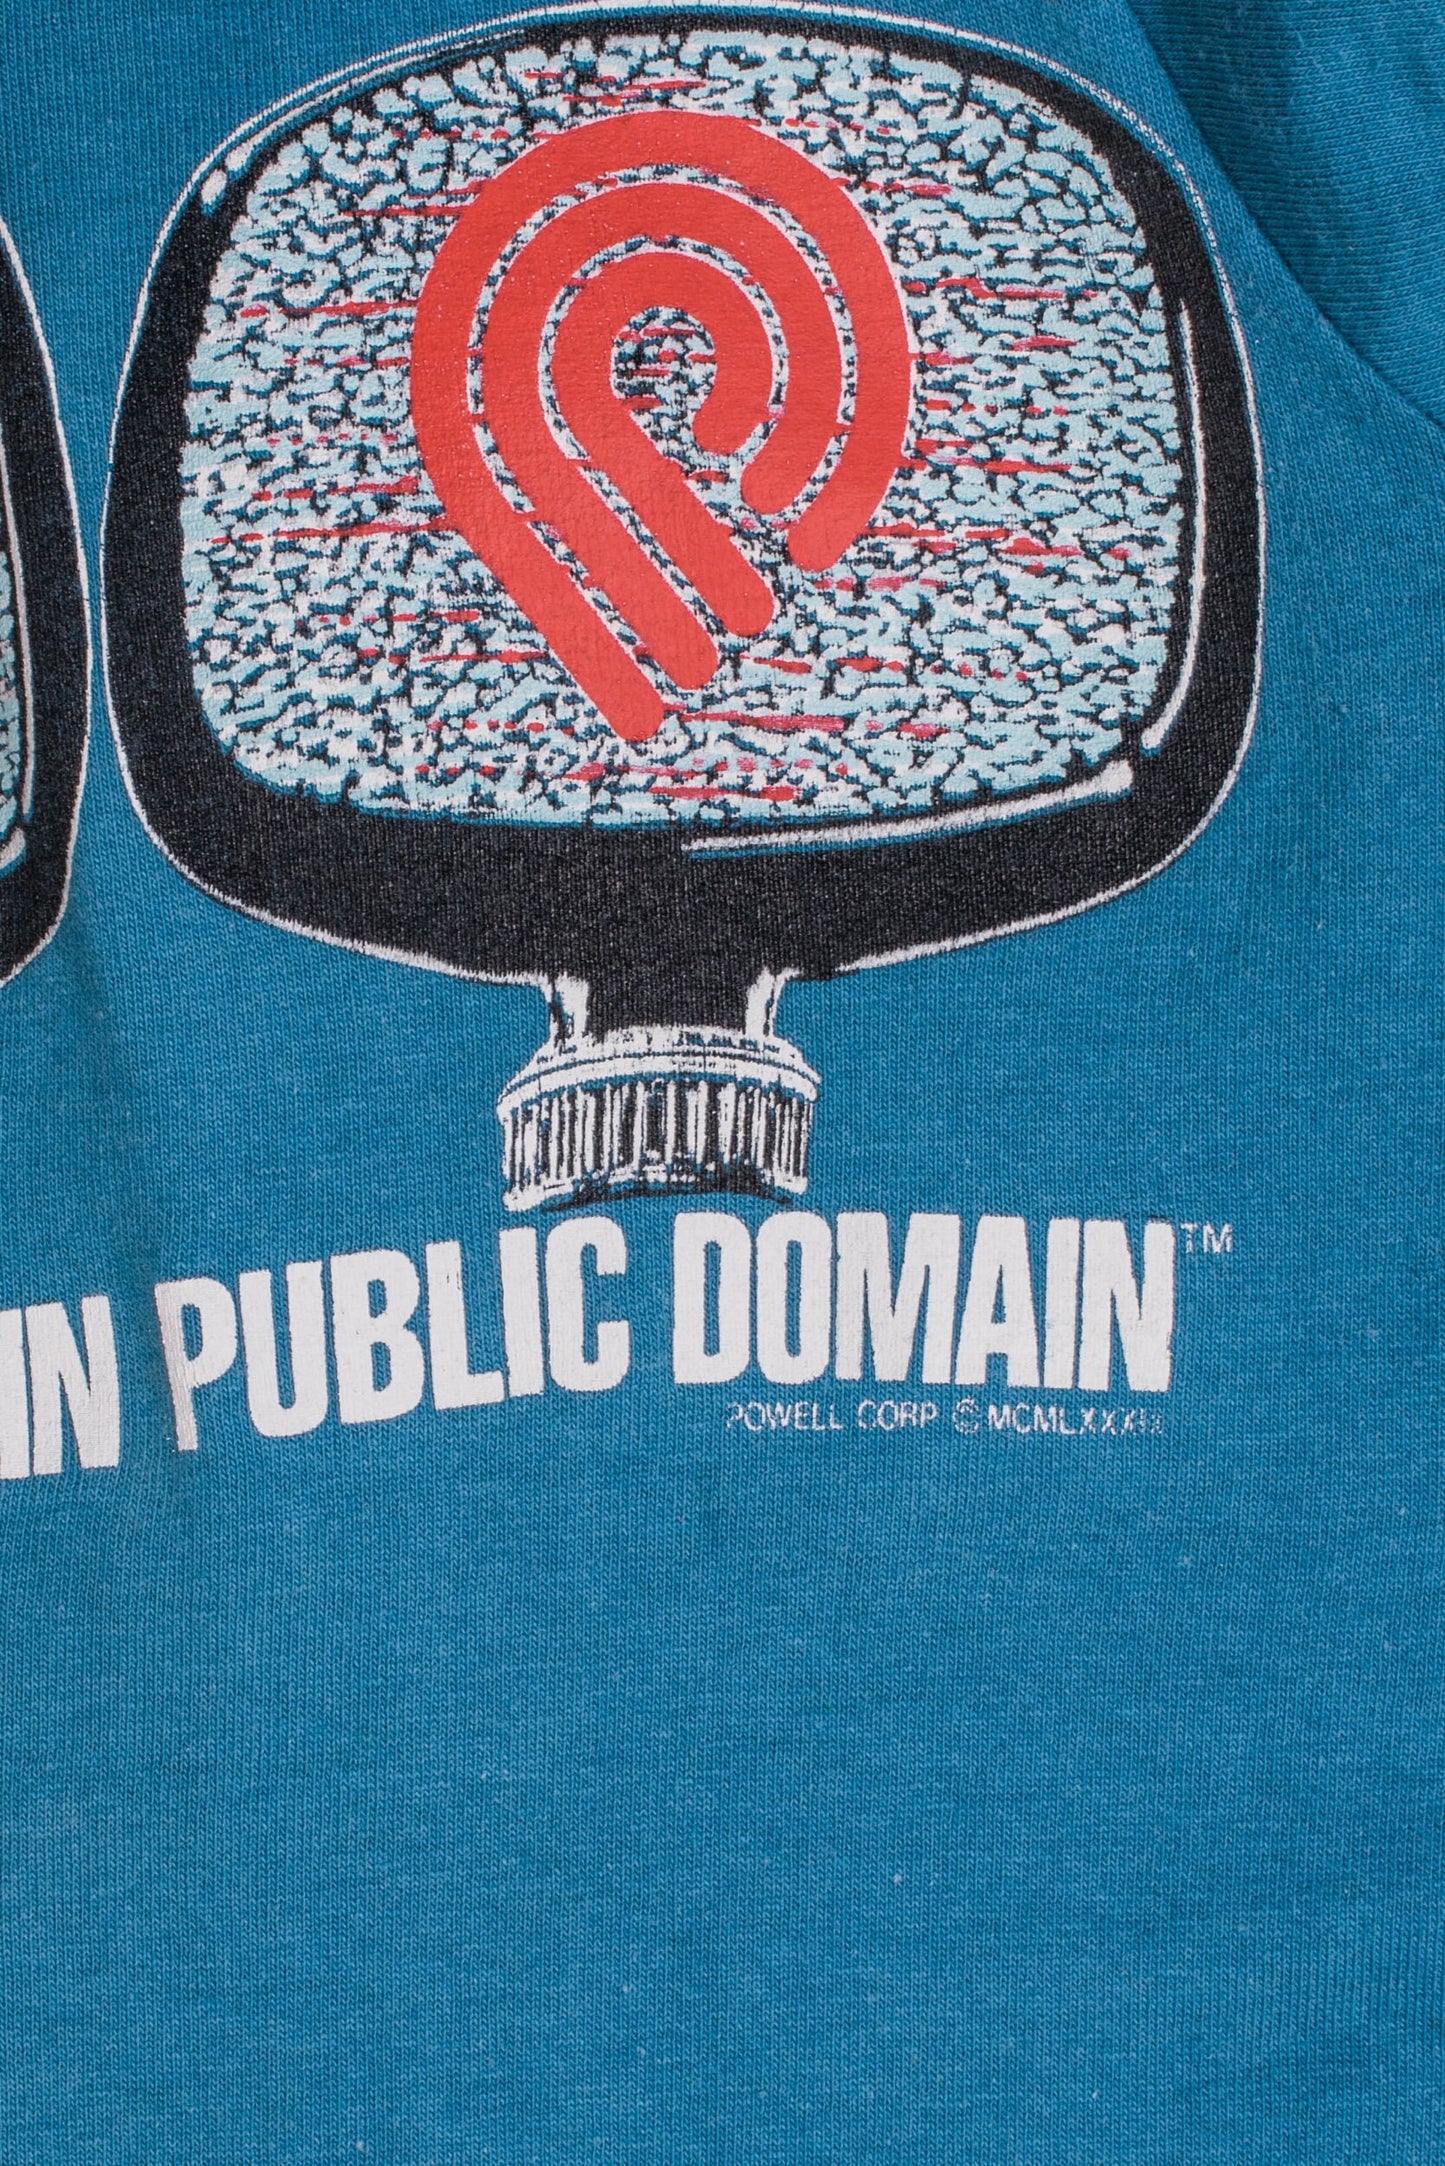 Vintage 1989 Powell Peralta Public Domain T-Shirt